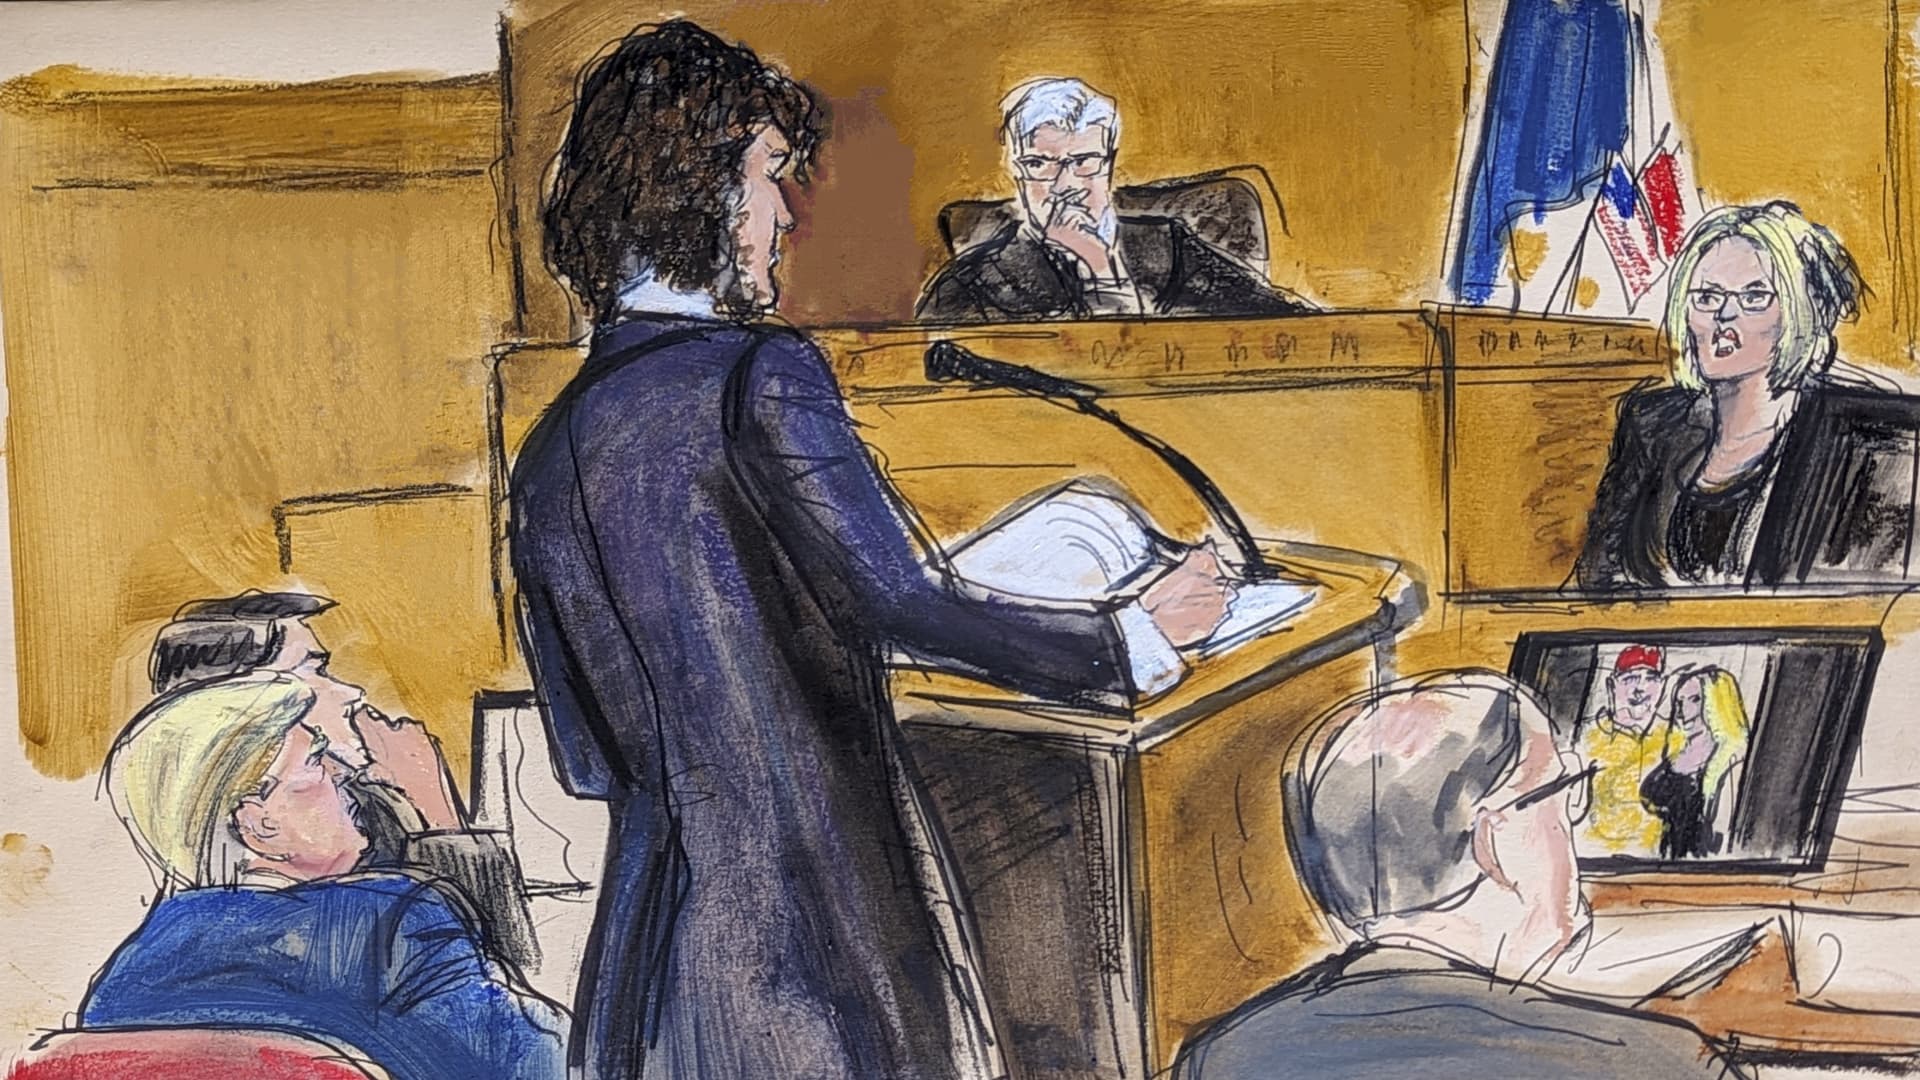 Trump trial: Stormy Daniels testifies she hates ex-president, desires him jailed if responsible